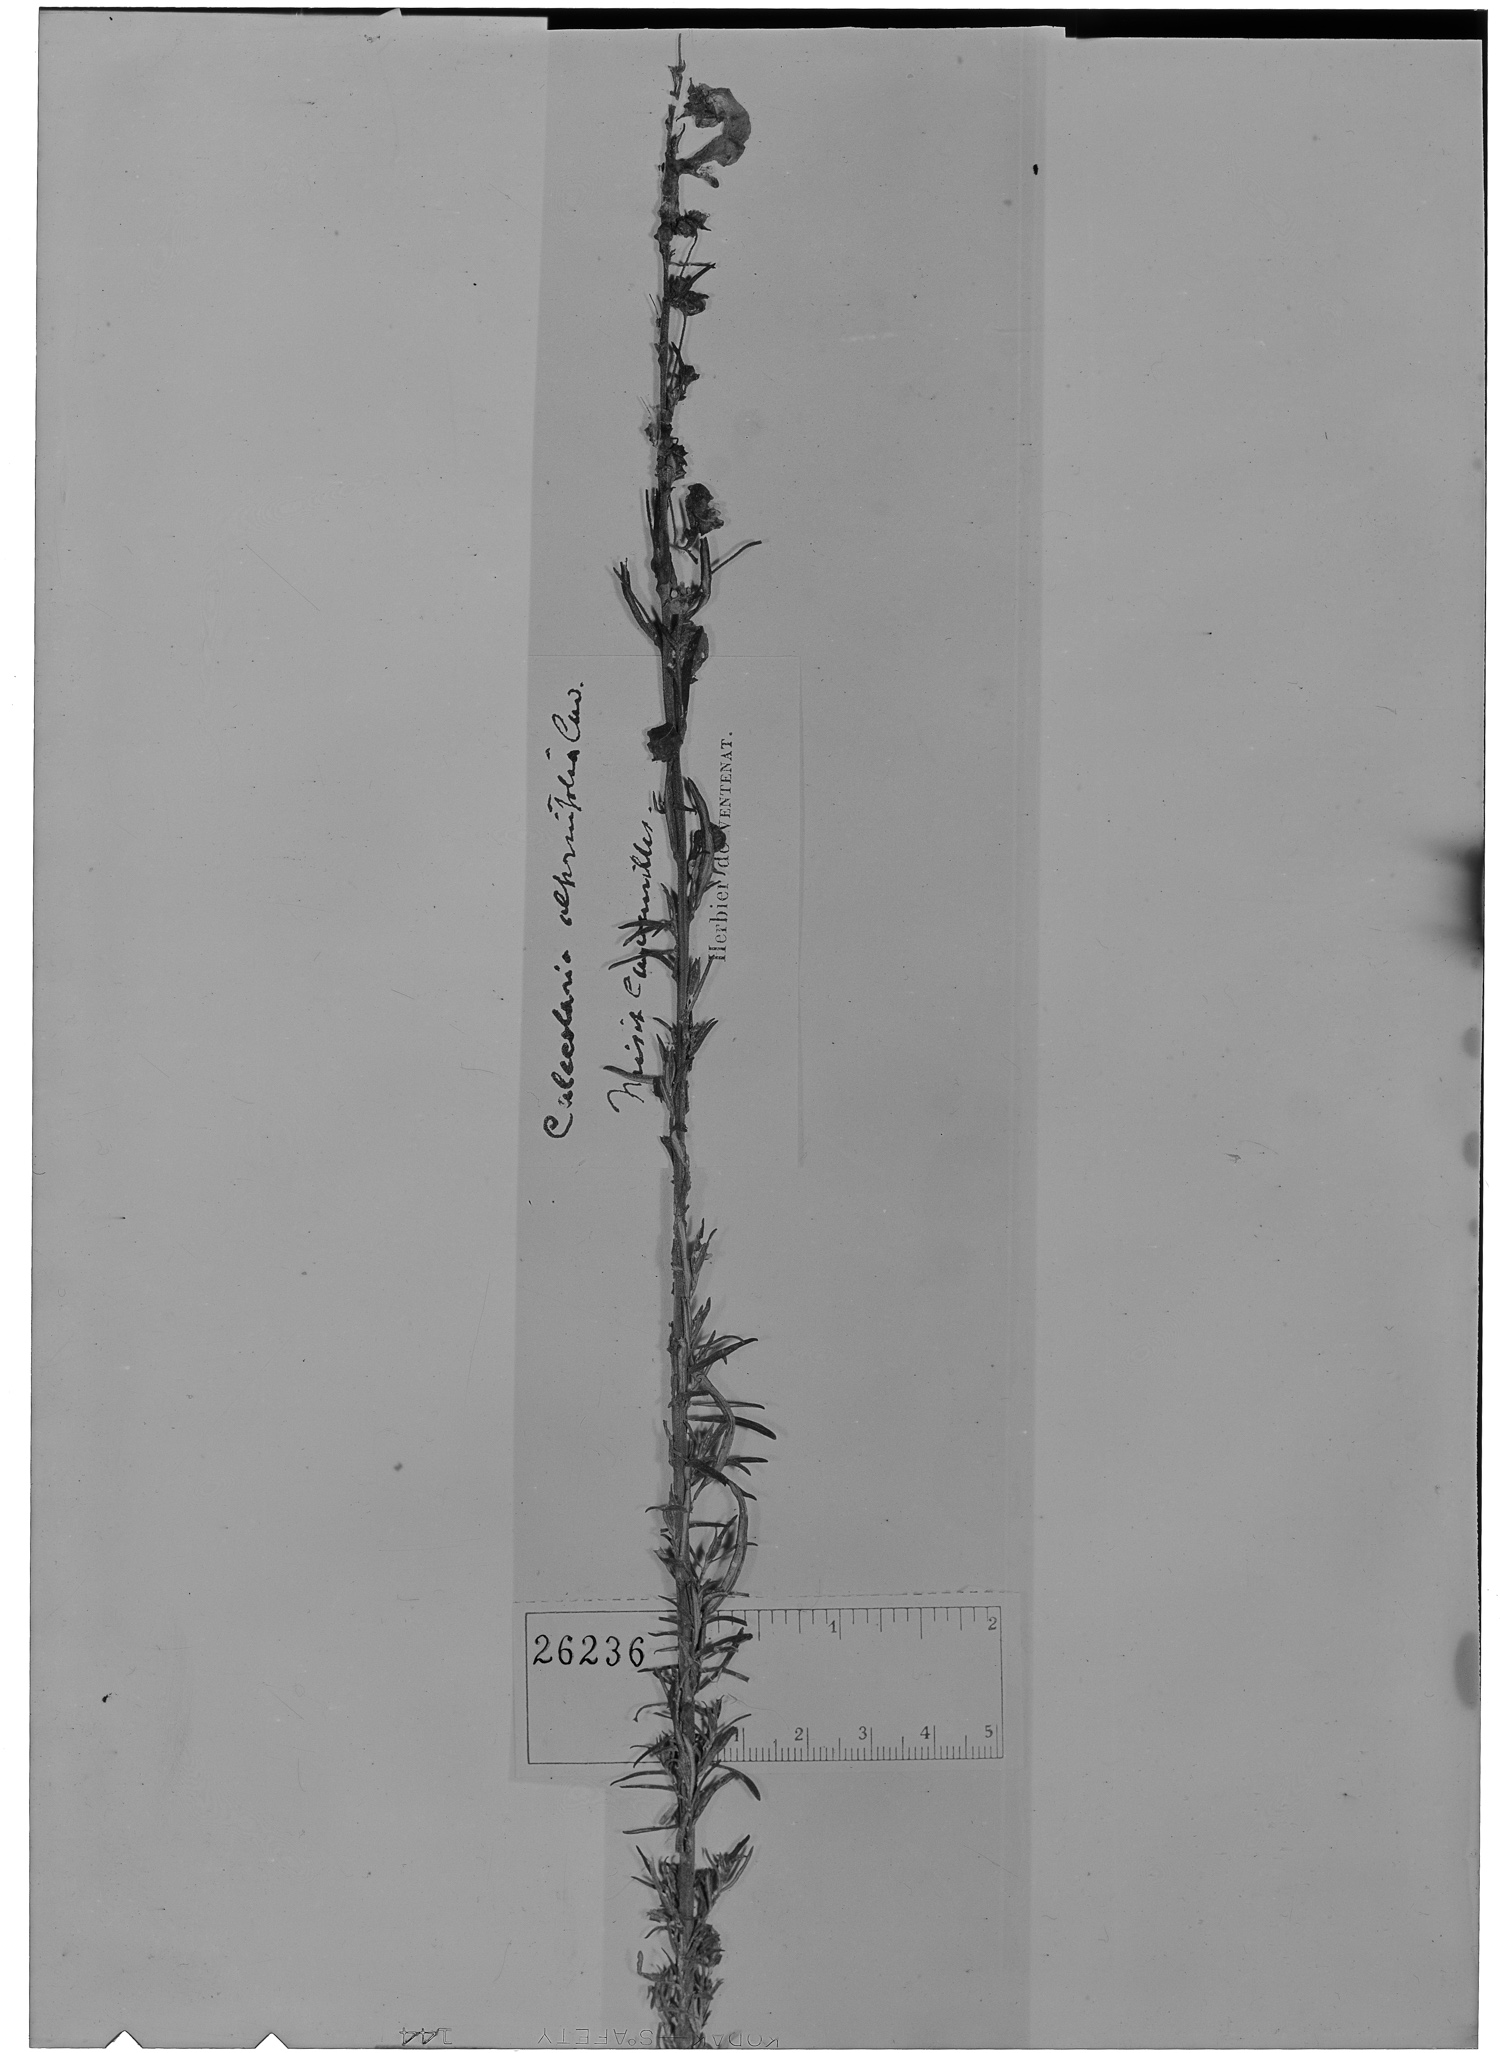 Calceolaria alternifolia image